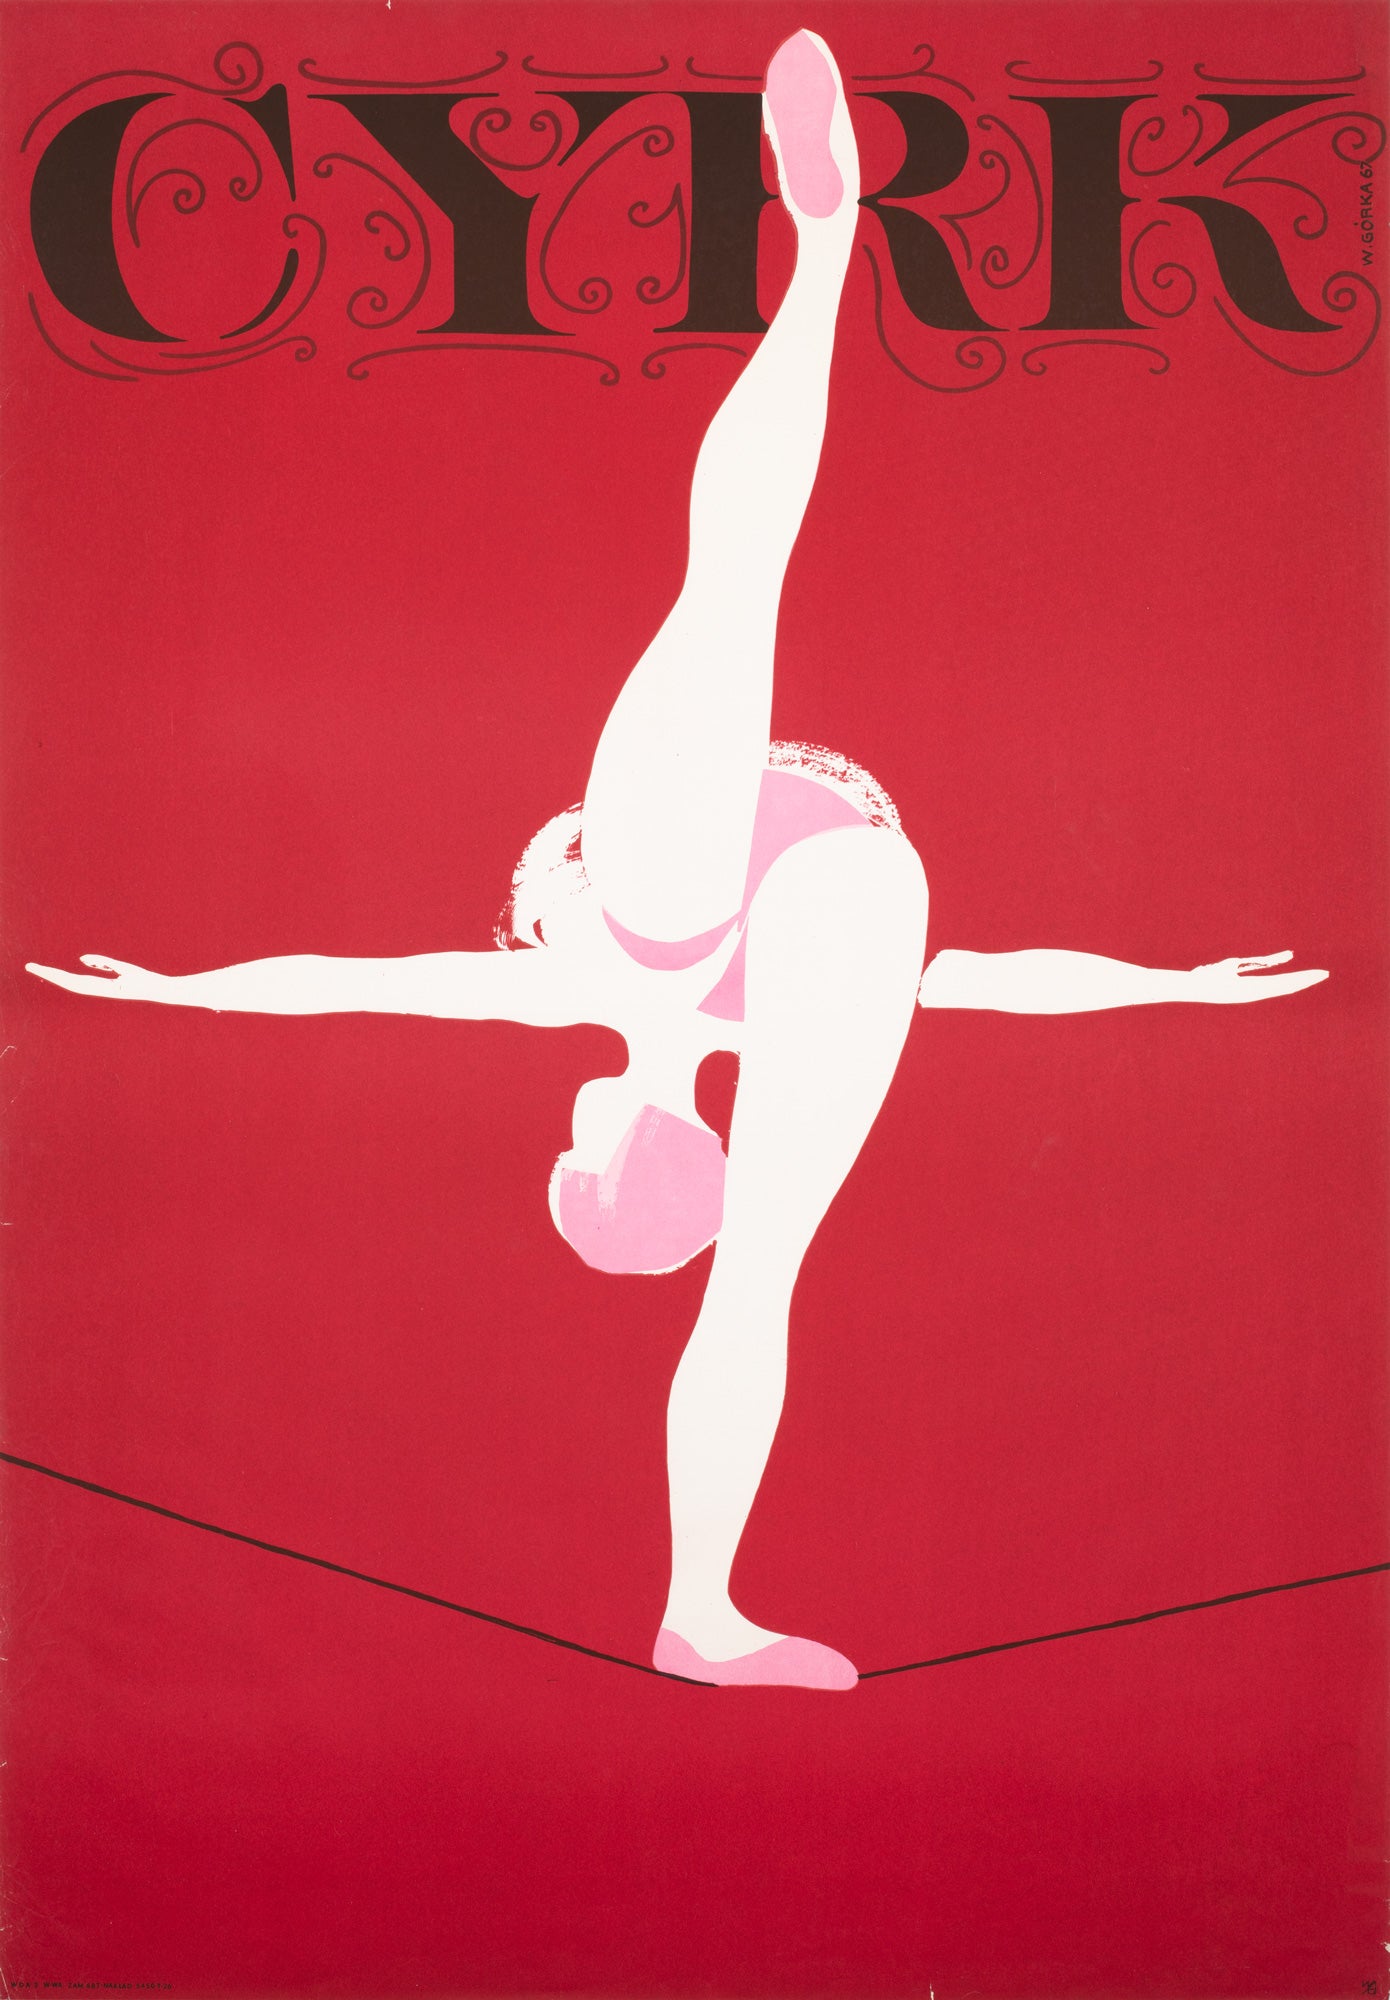 Cyrk Woman on Tightrope 1967 Polish Circus Poster, Gorka